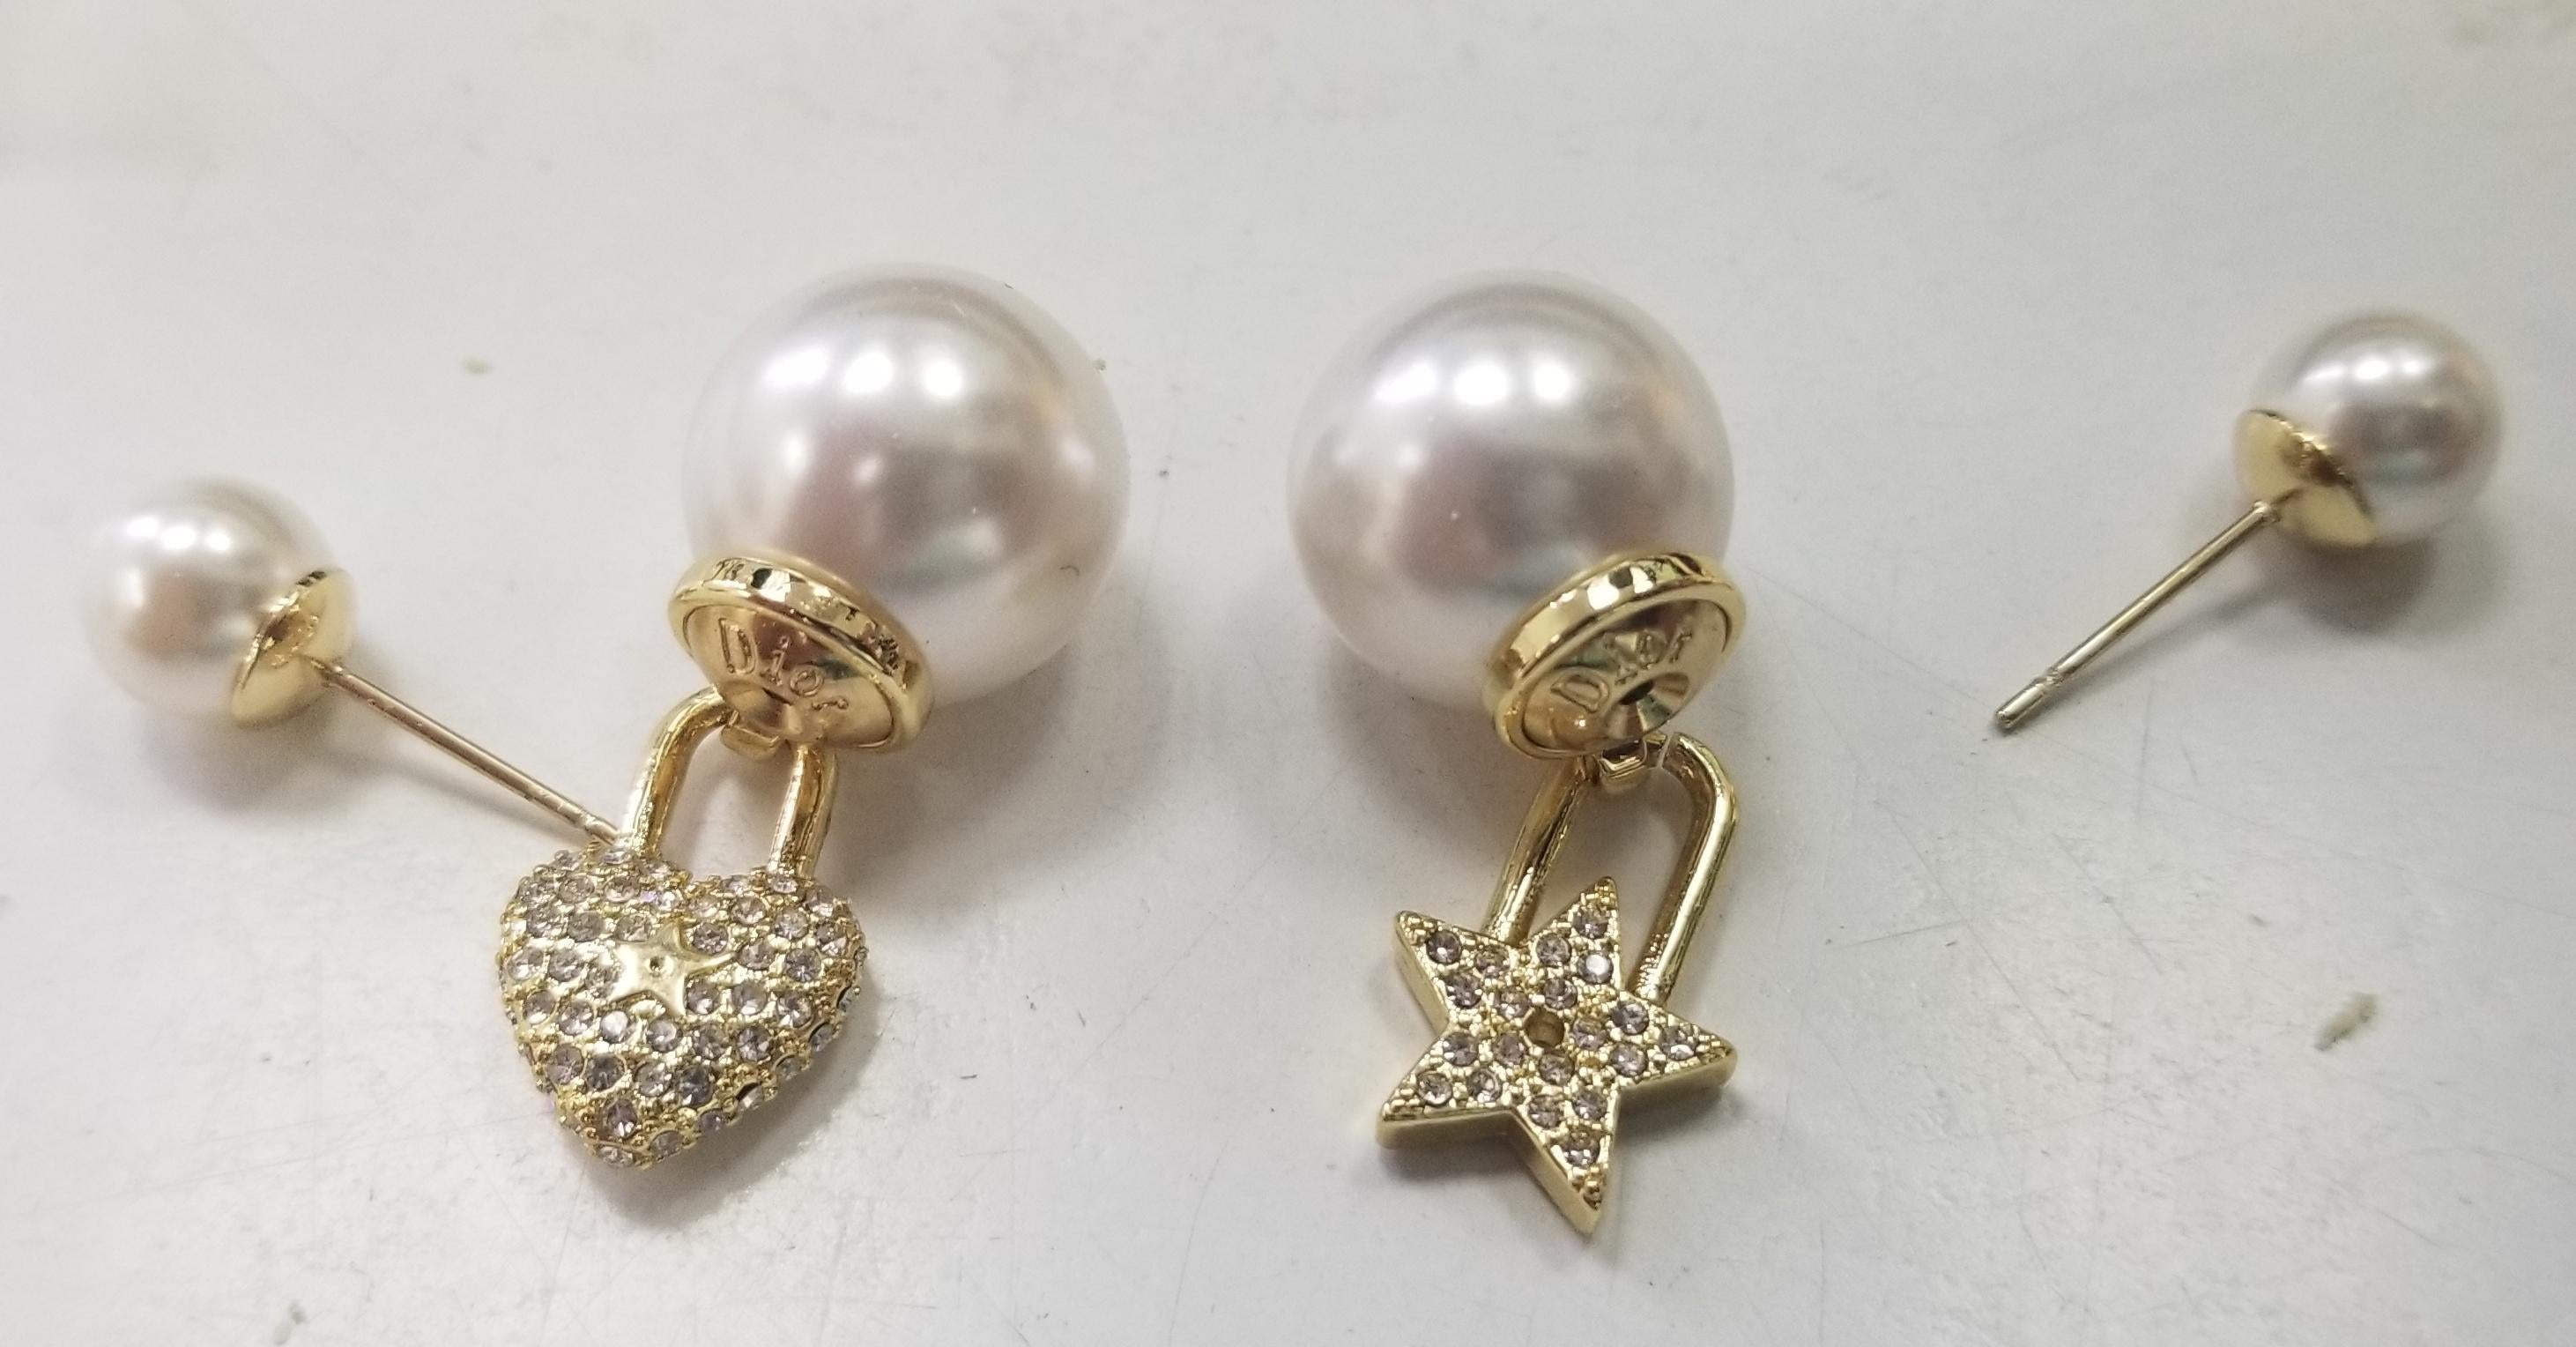 dior star earrings